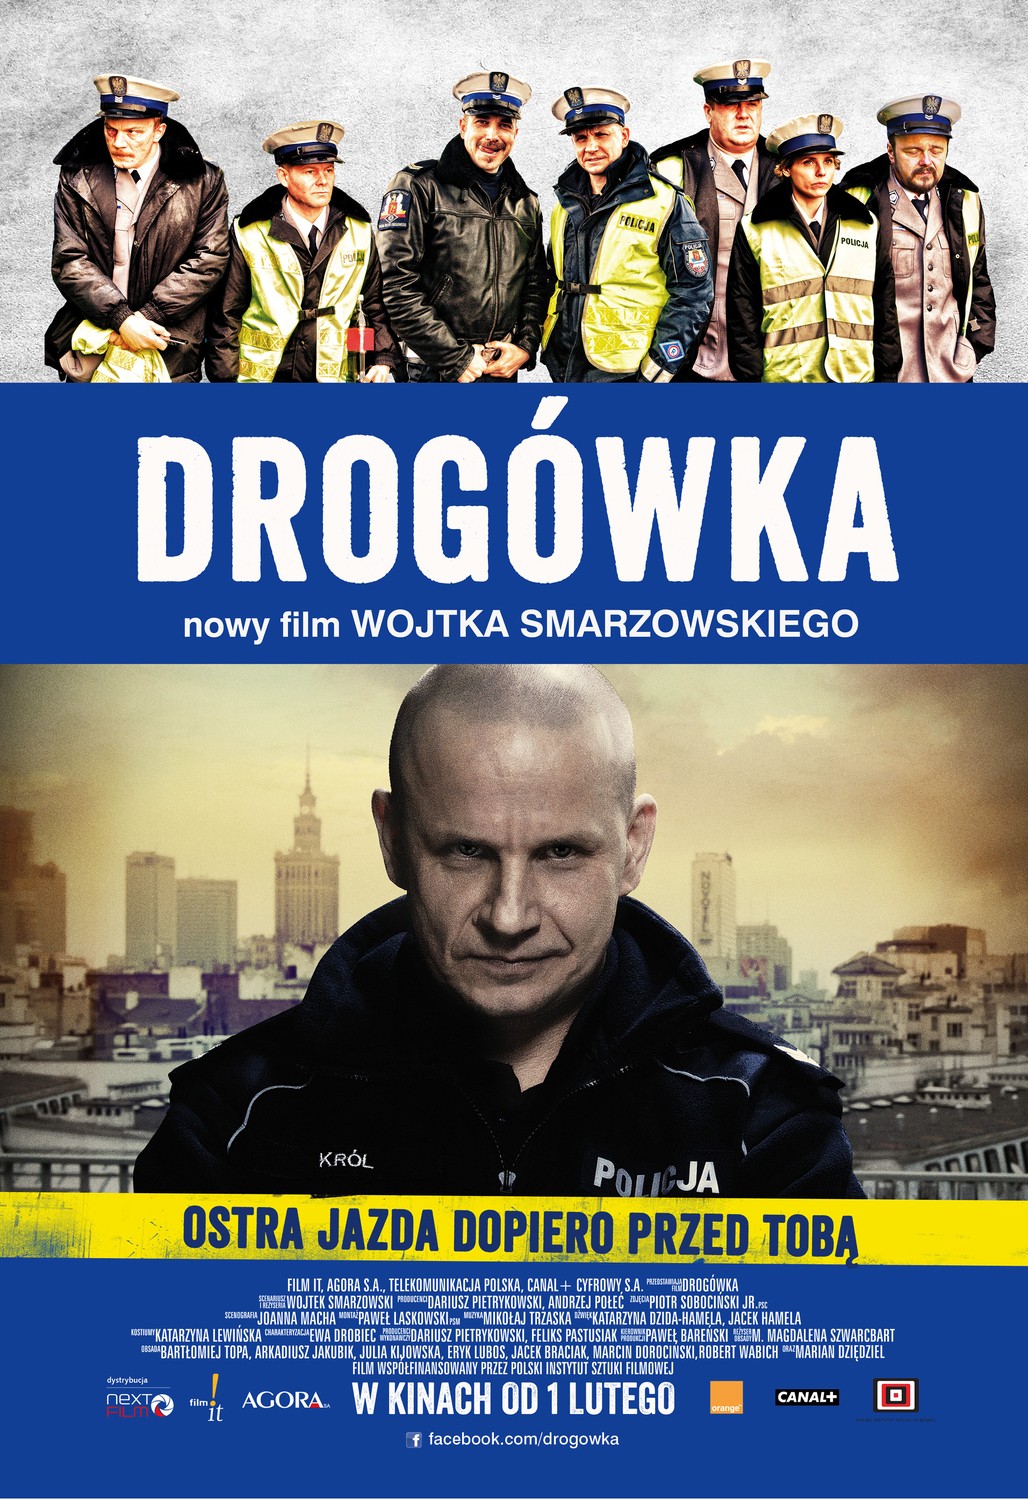 Extra Large Movie Poster Image for Drogówka 